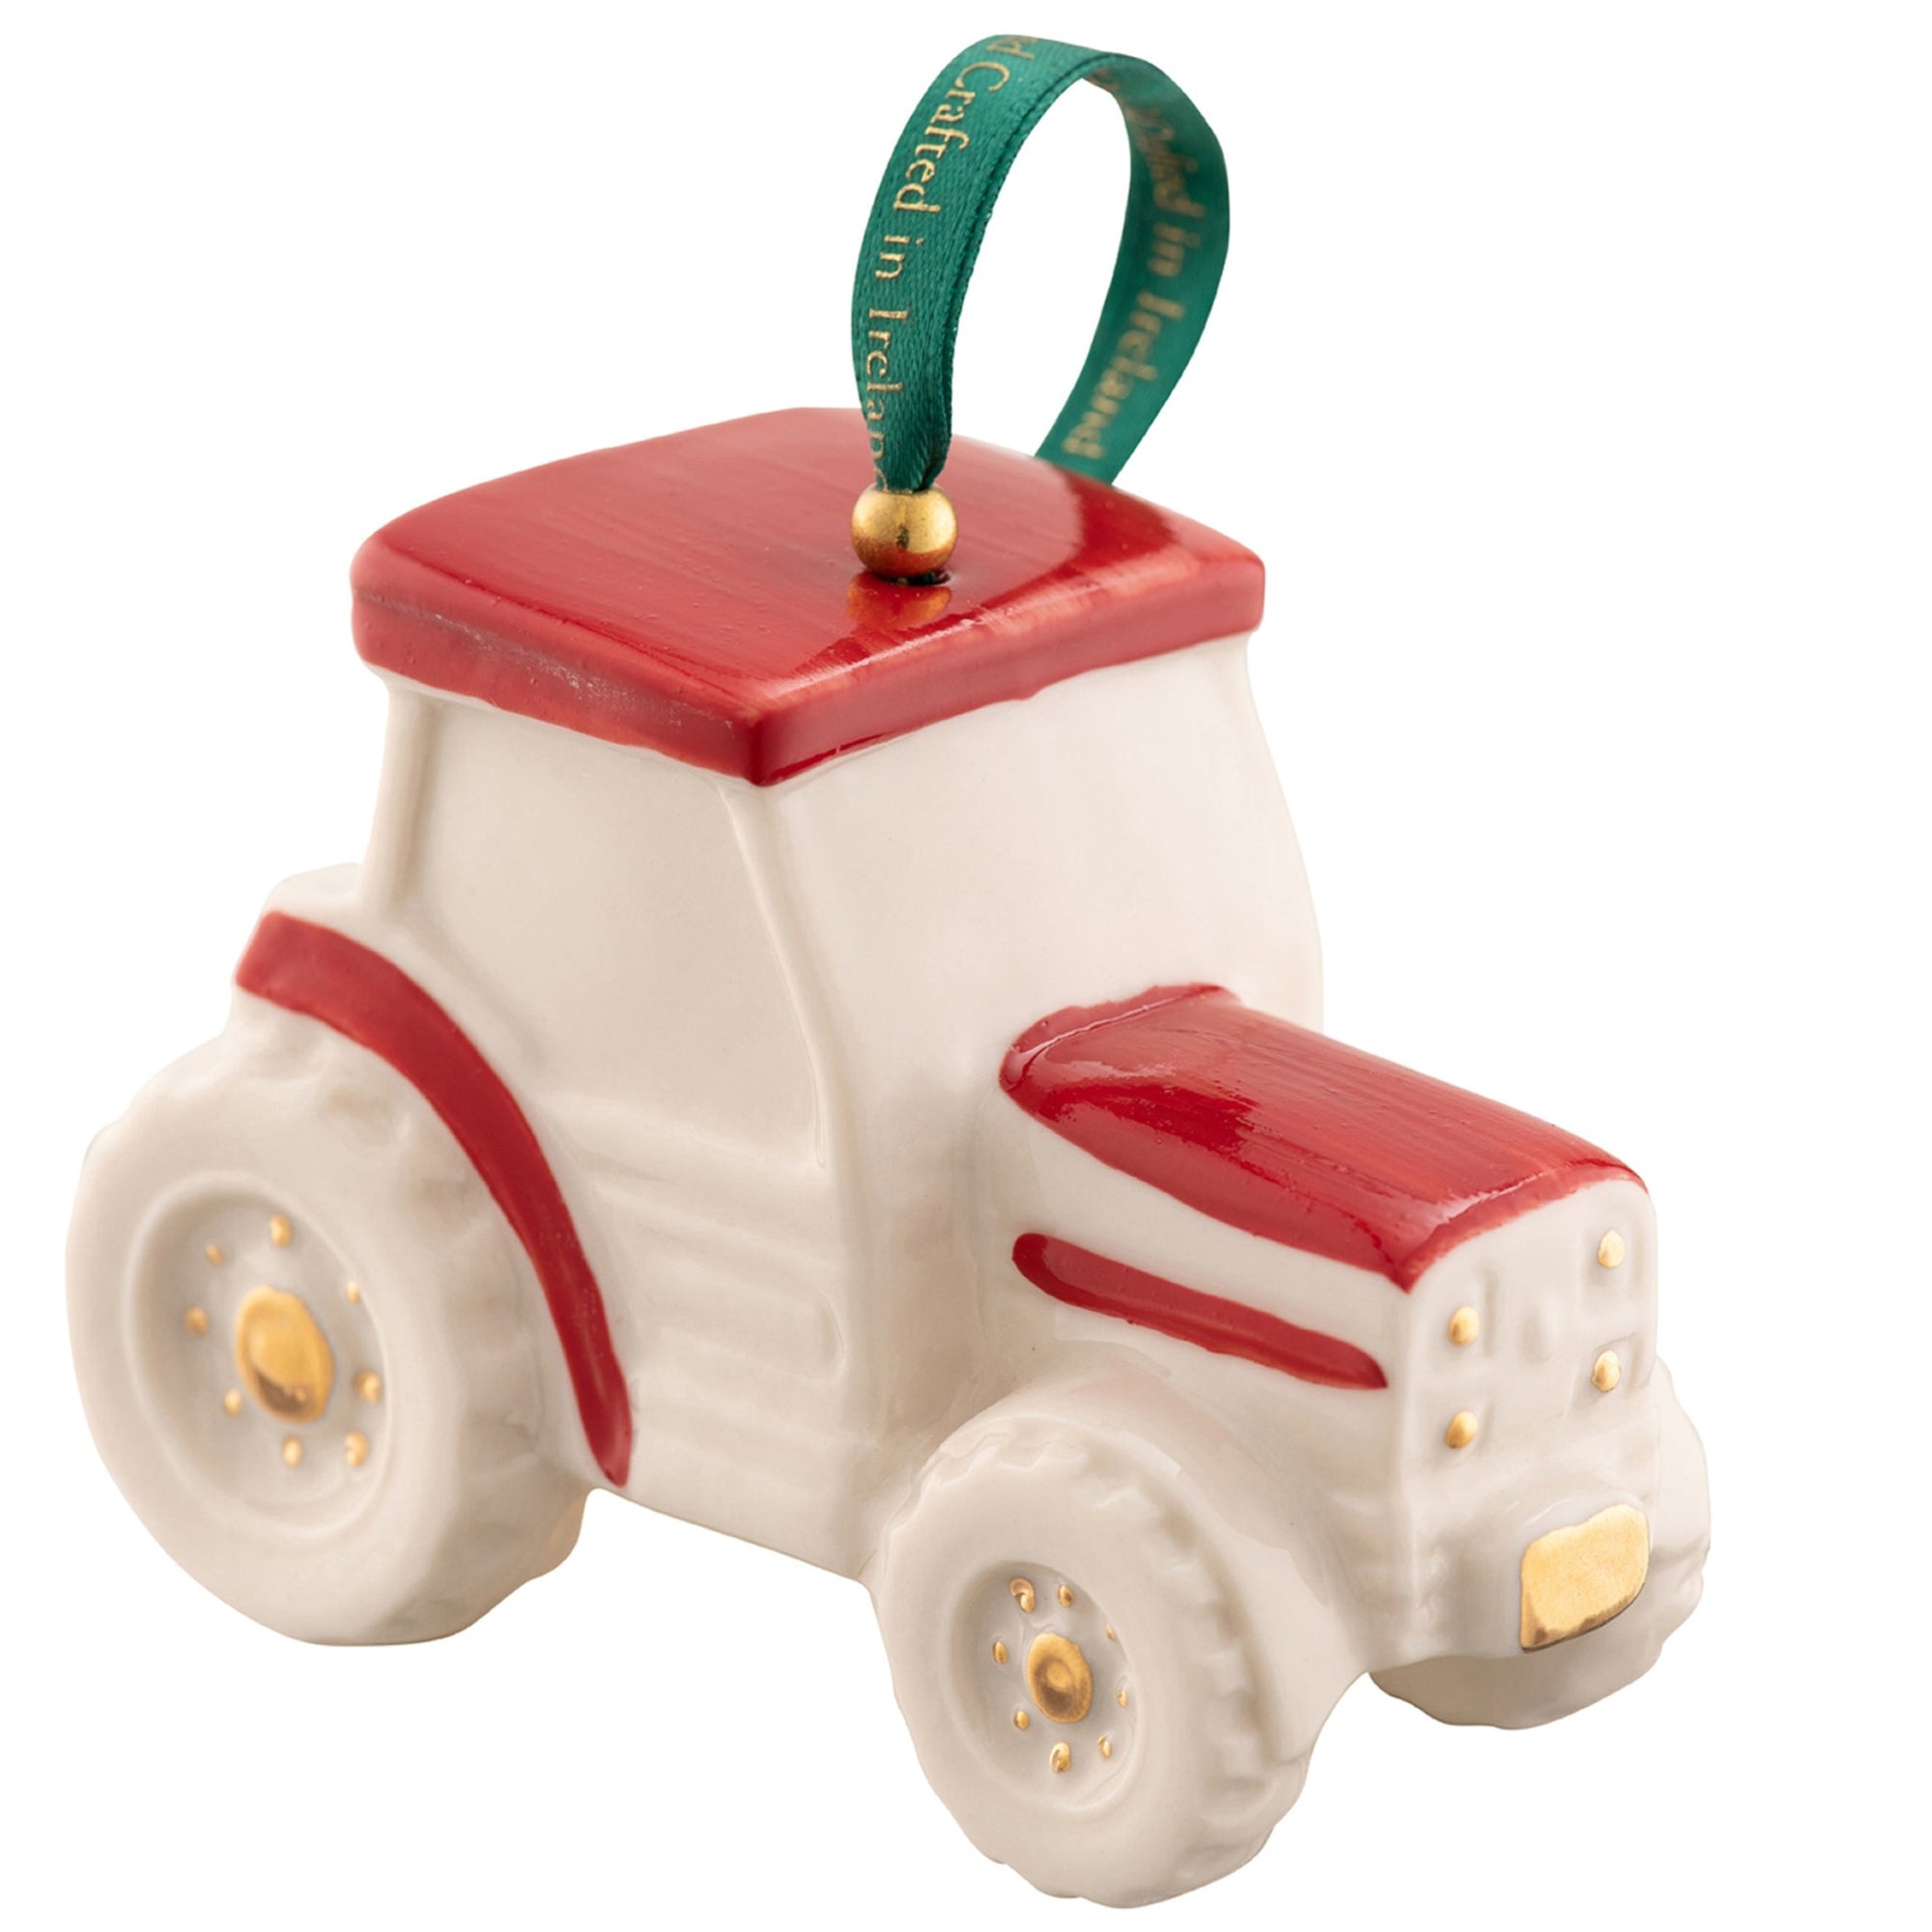 Belleek Classic Red Tractor Ornament: 37621